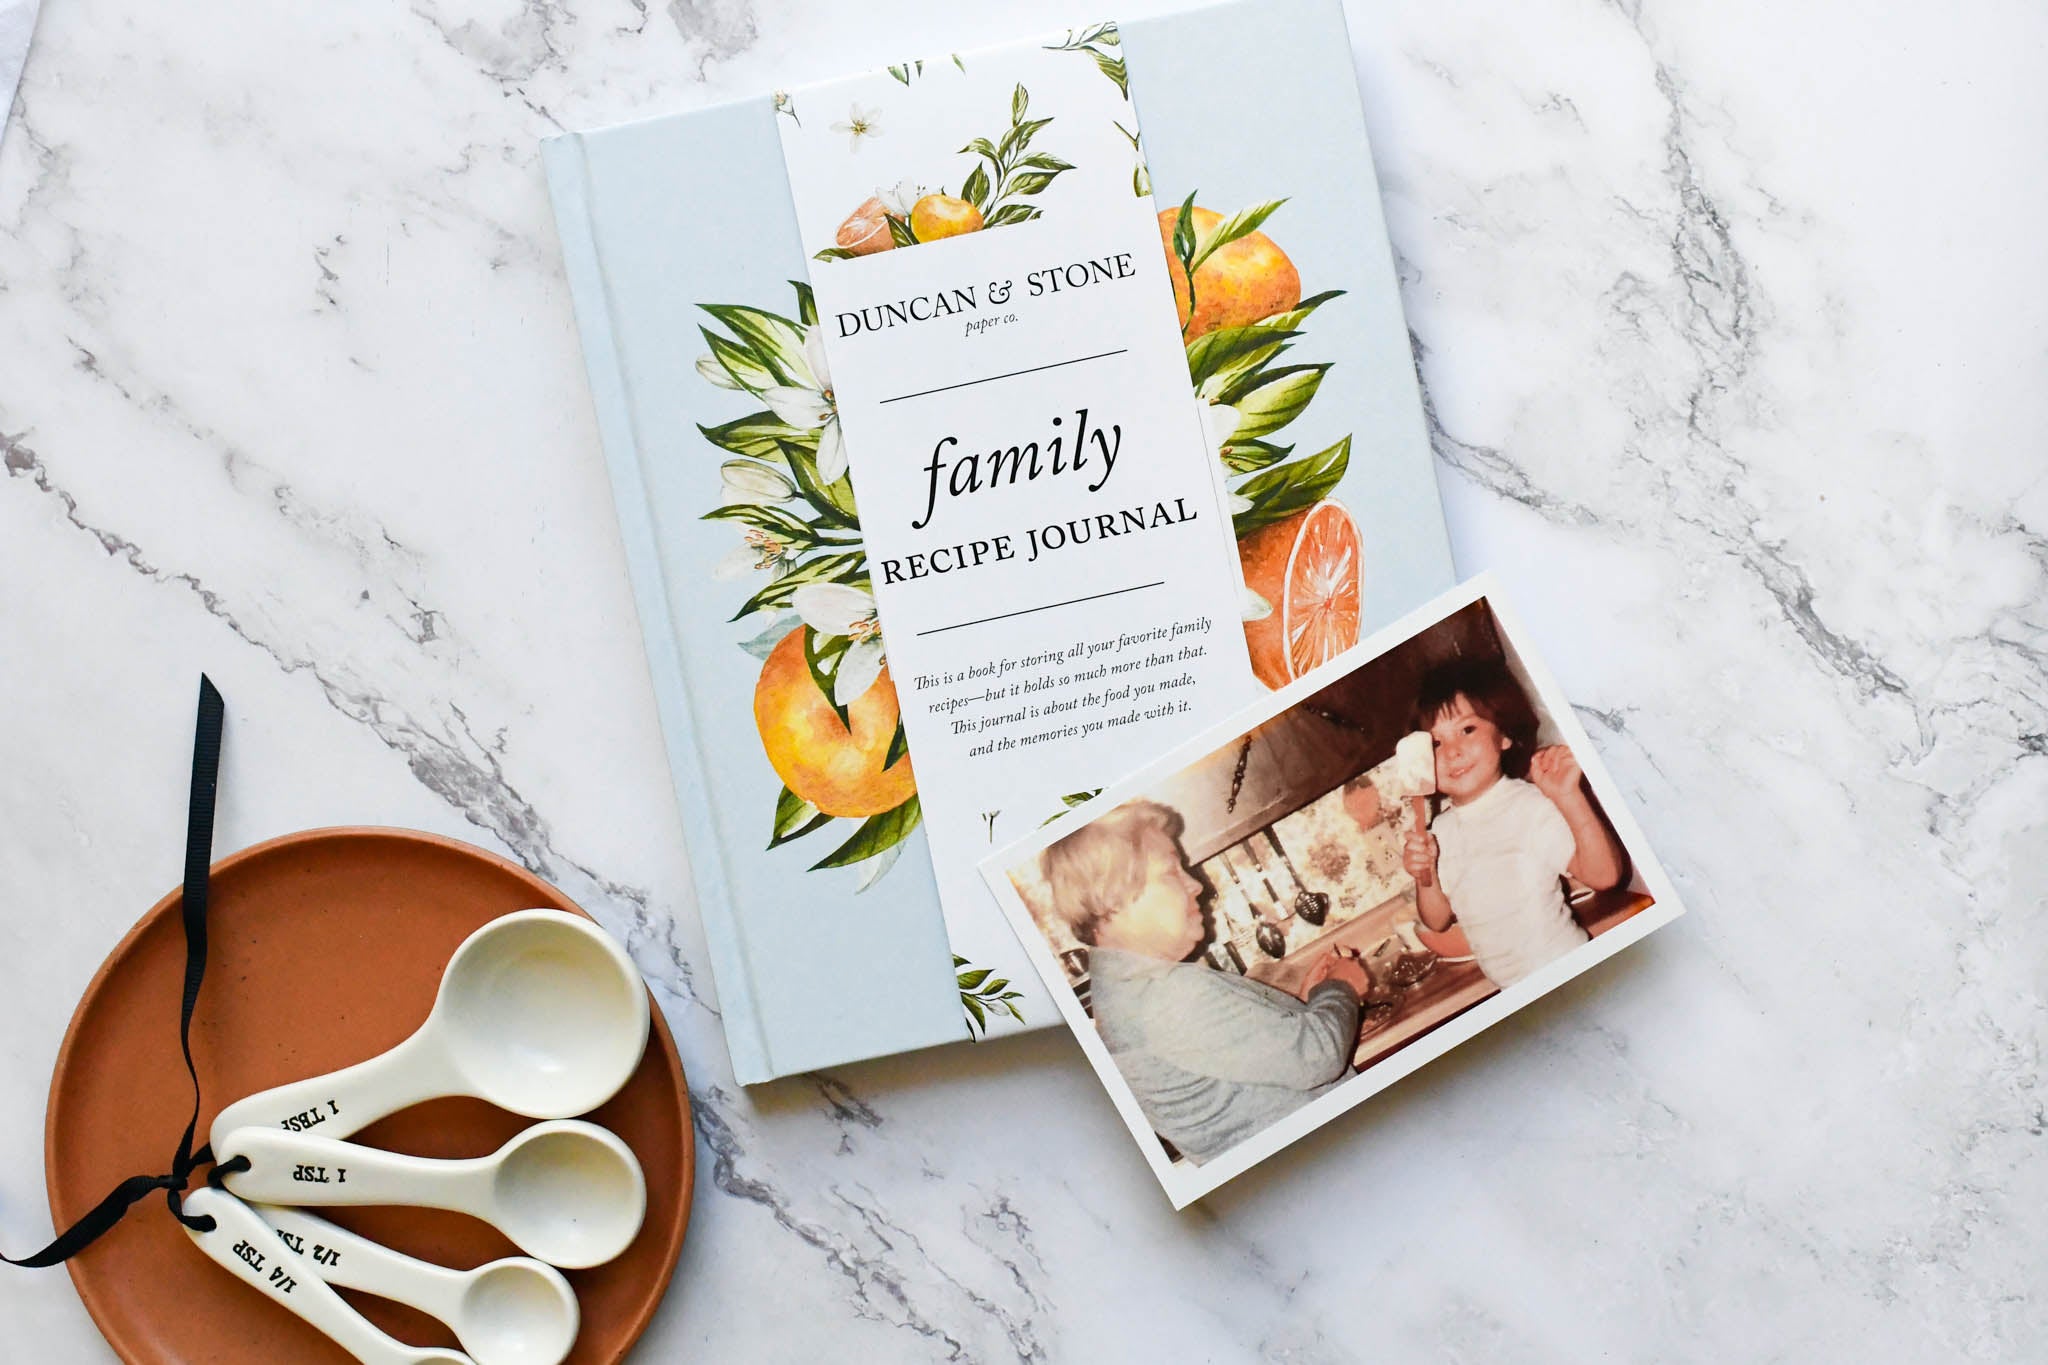 Keepsake Recipe Book: Create Your Own Family Cookbook